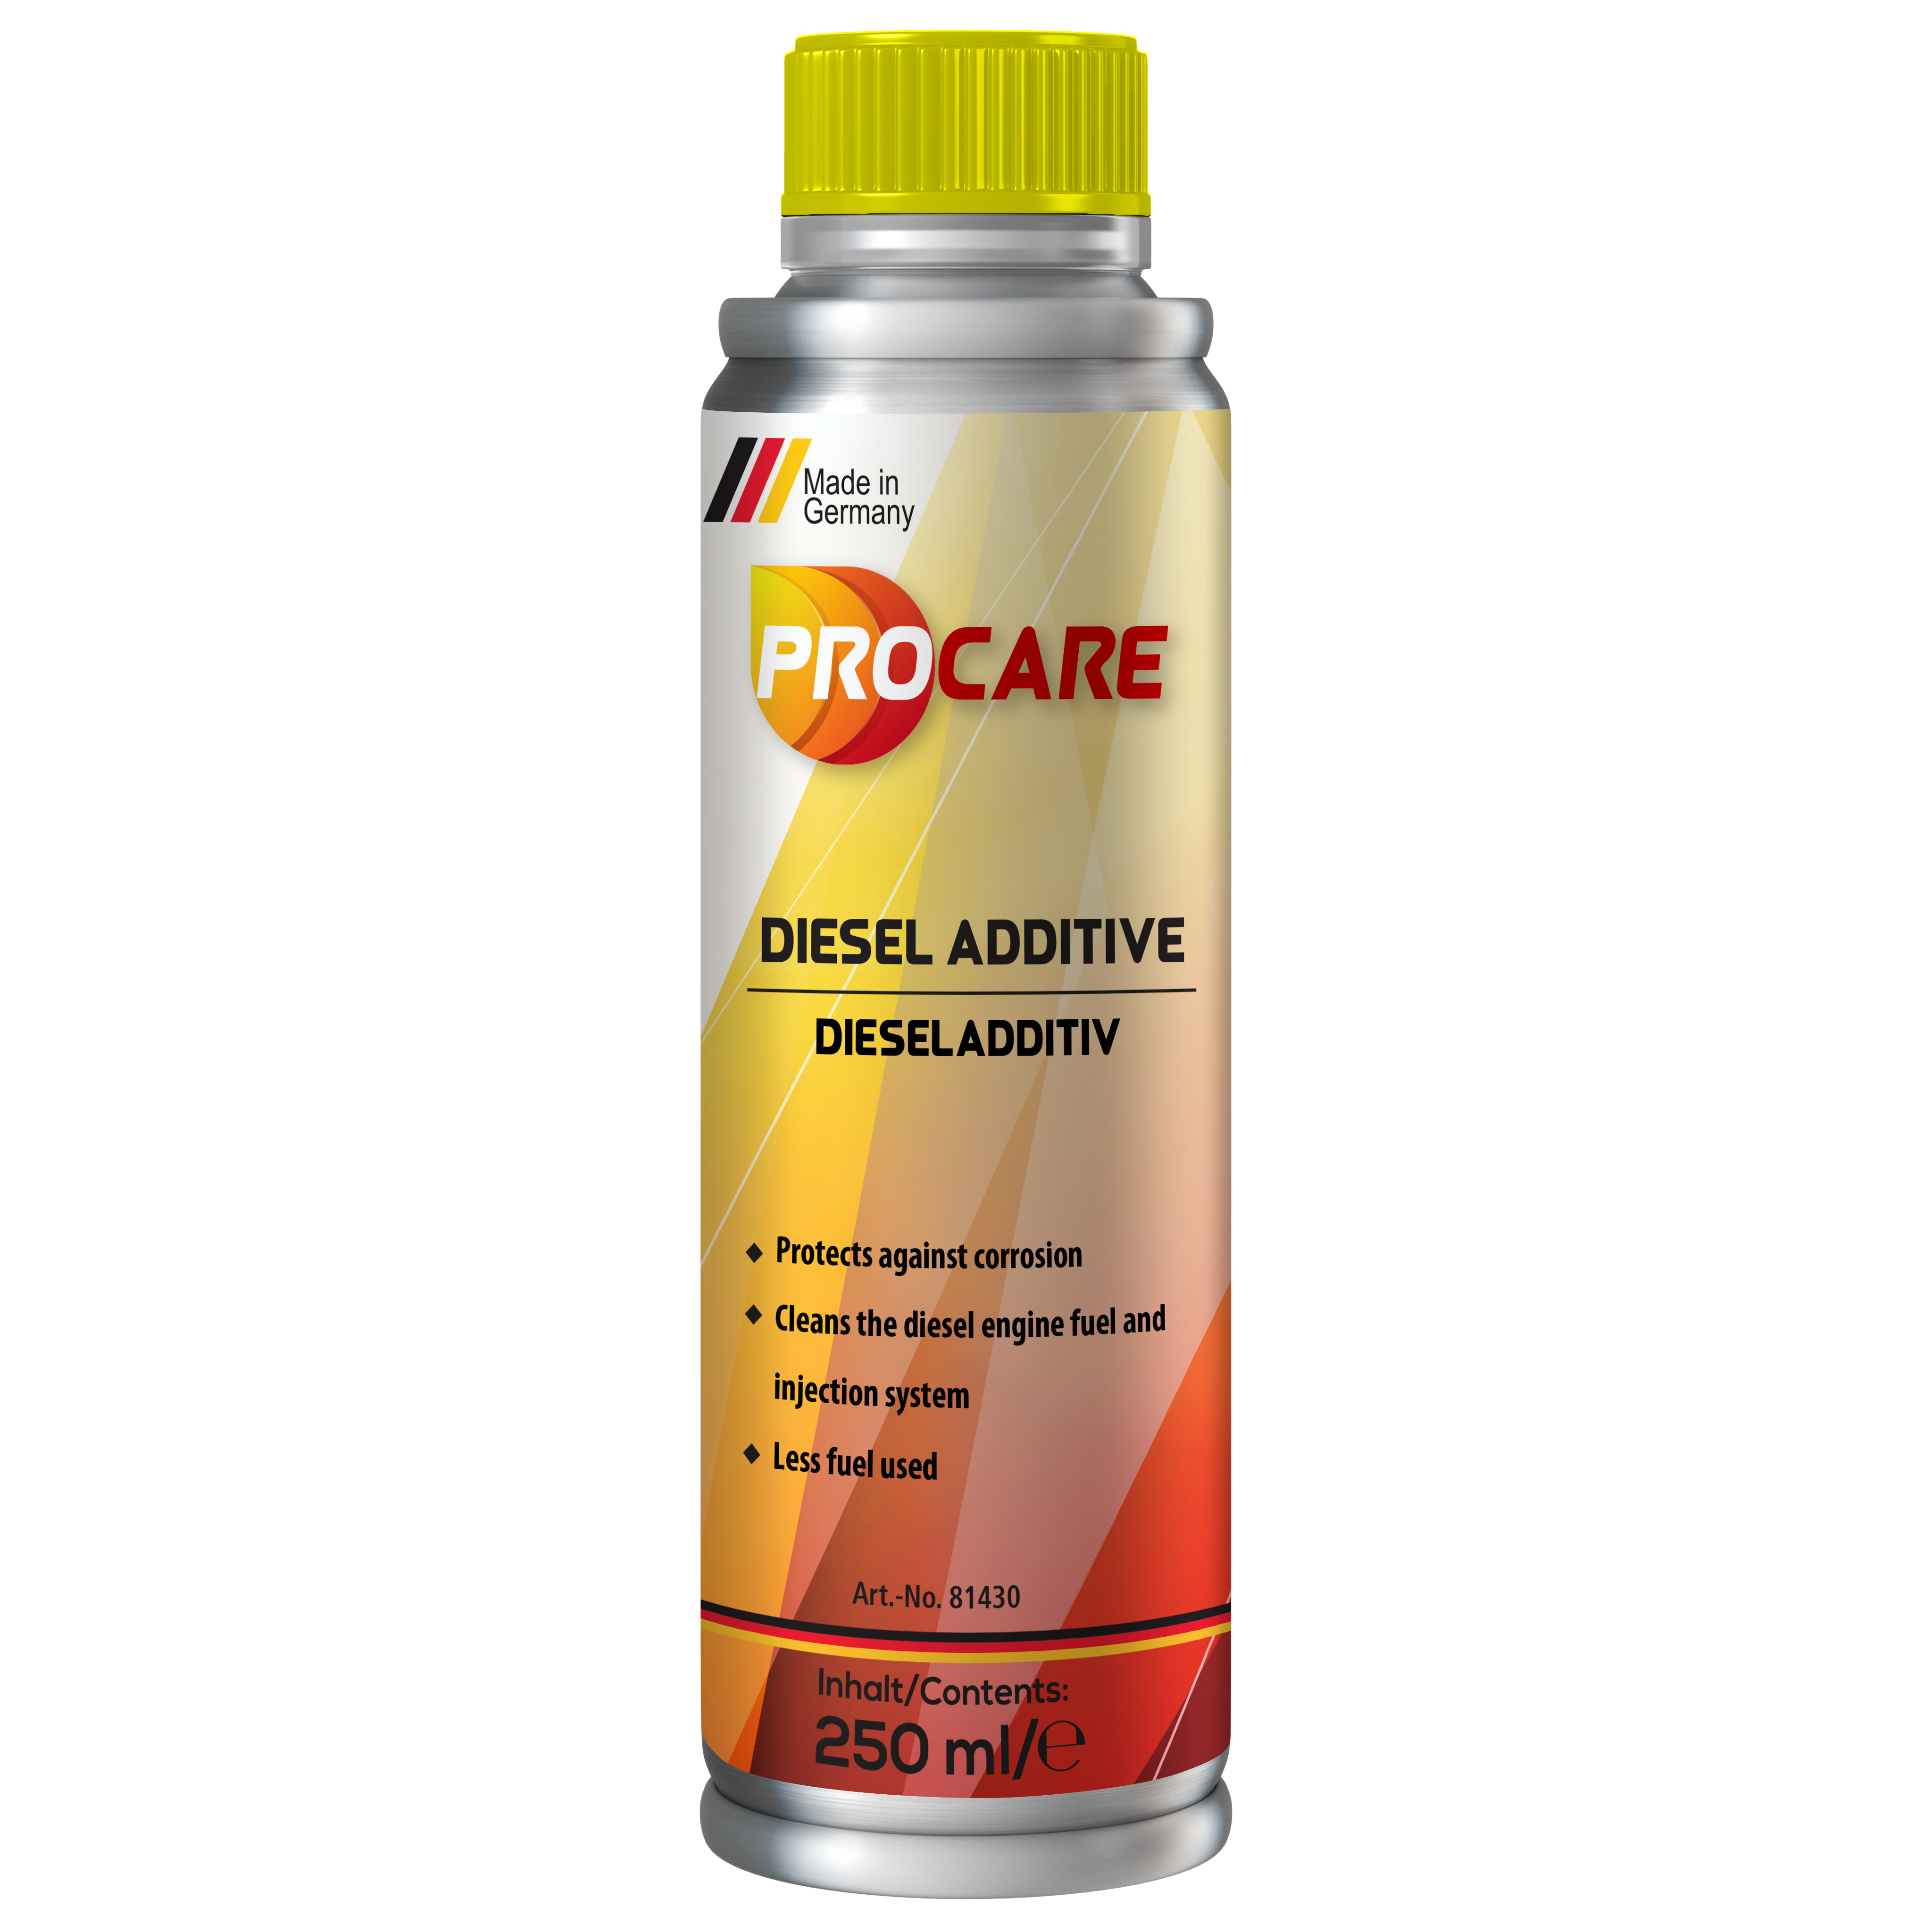 PROFI-CAR – Products – Additives – Diesel Additives